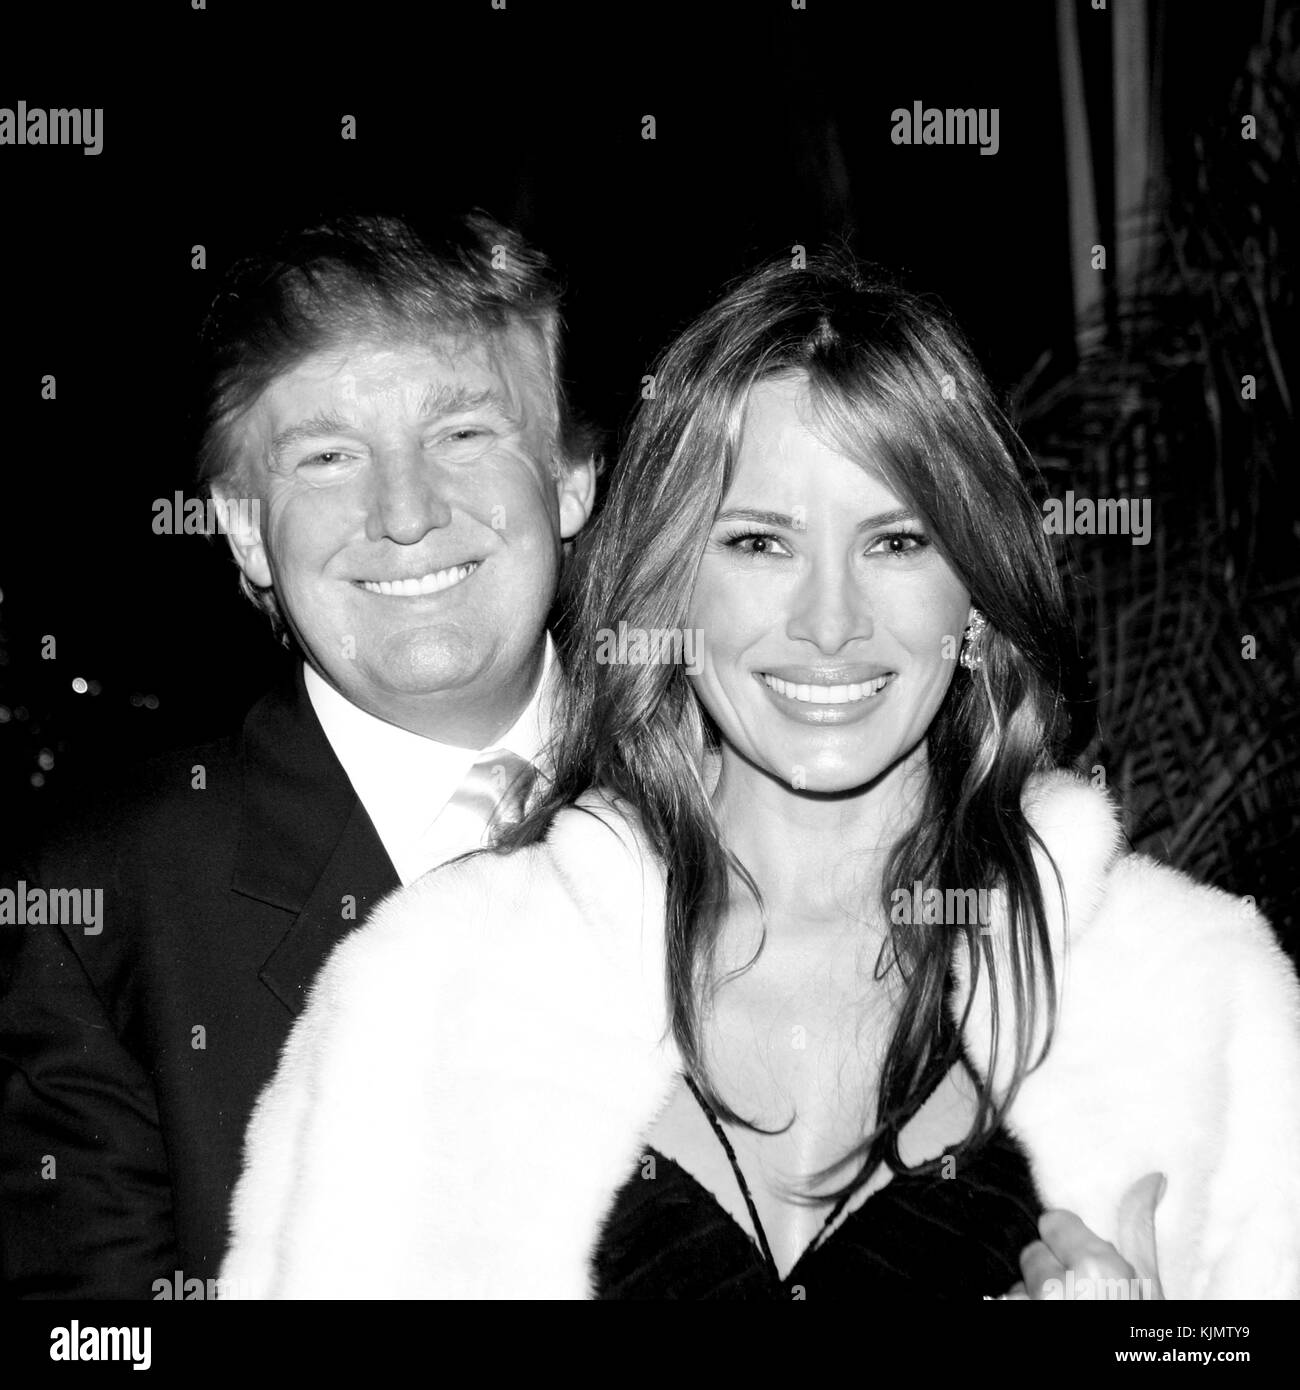 Melania Trump Black and White Stock Photos & Images - Alamy